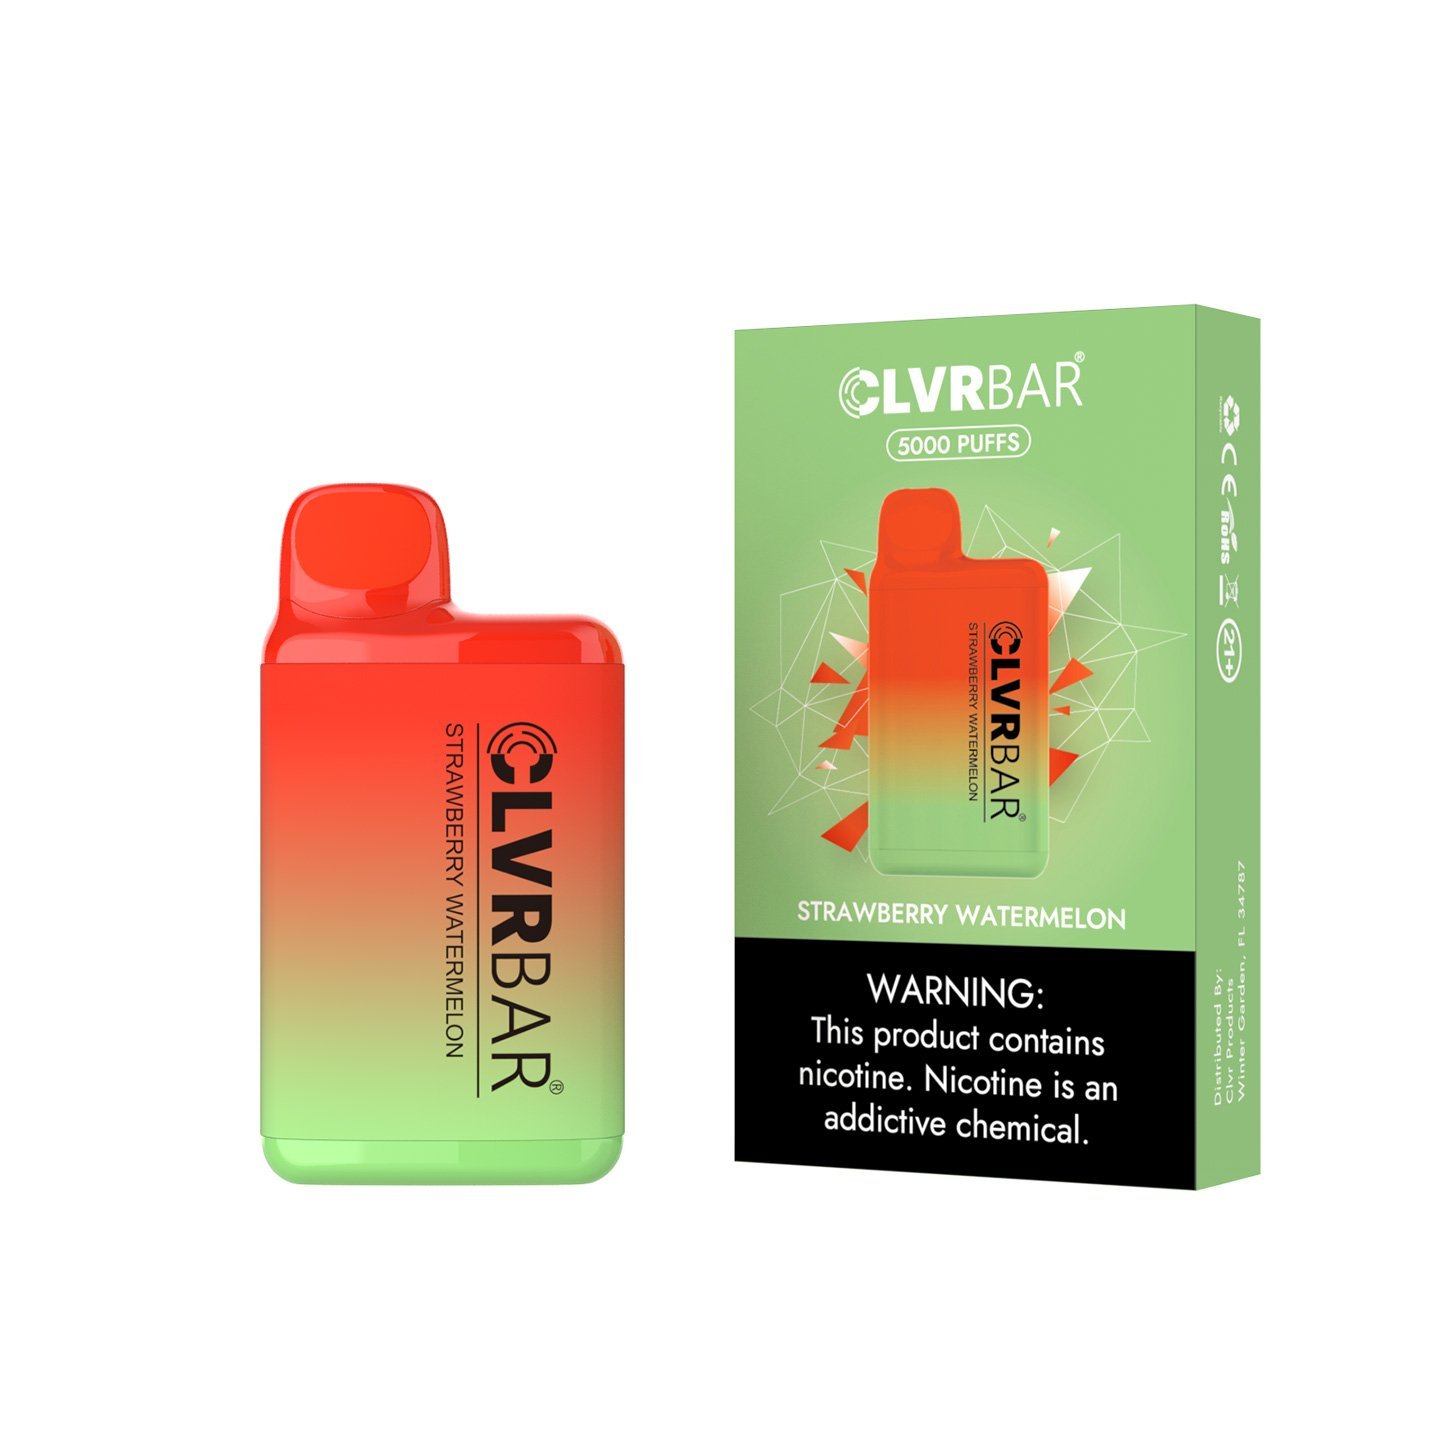 CLVRBAR Disposable Device (Strawberry Watermelon - 5000 Puffs)